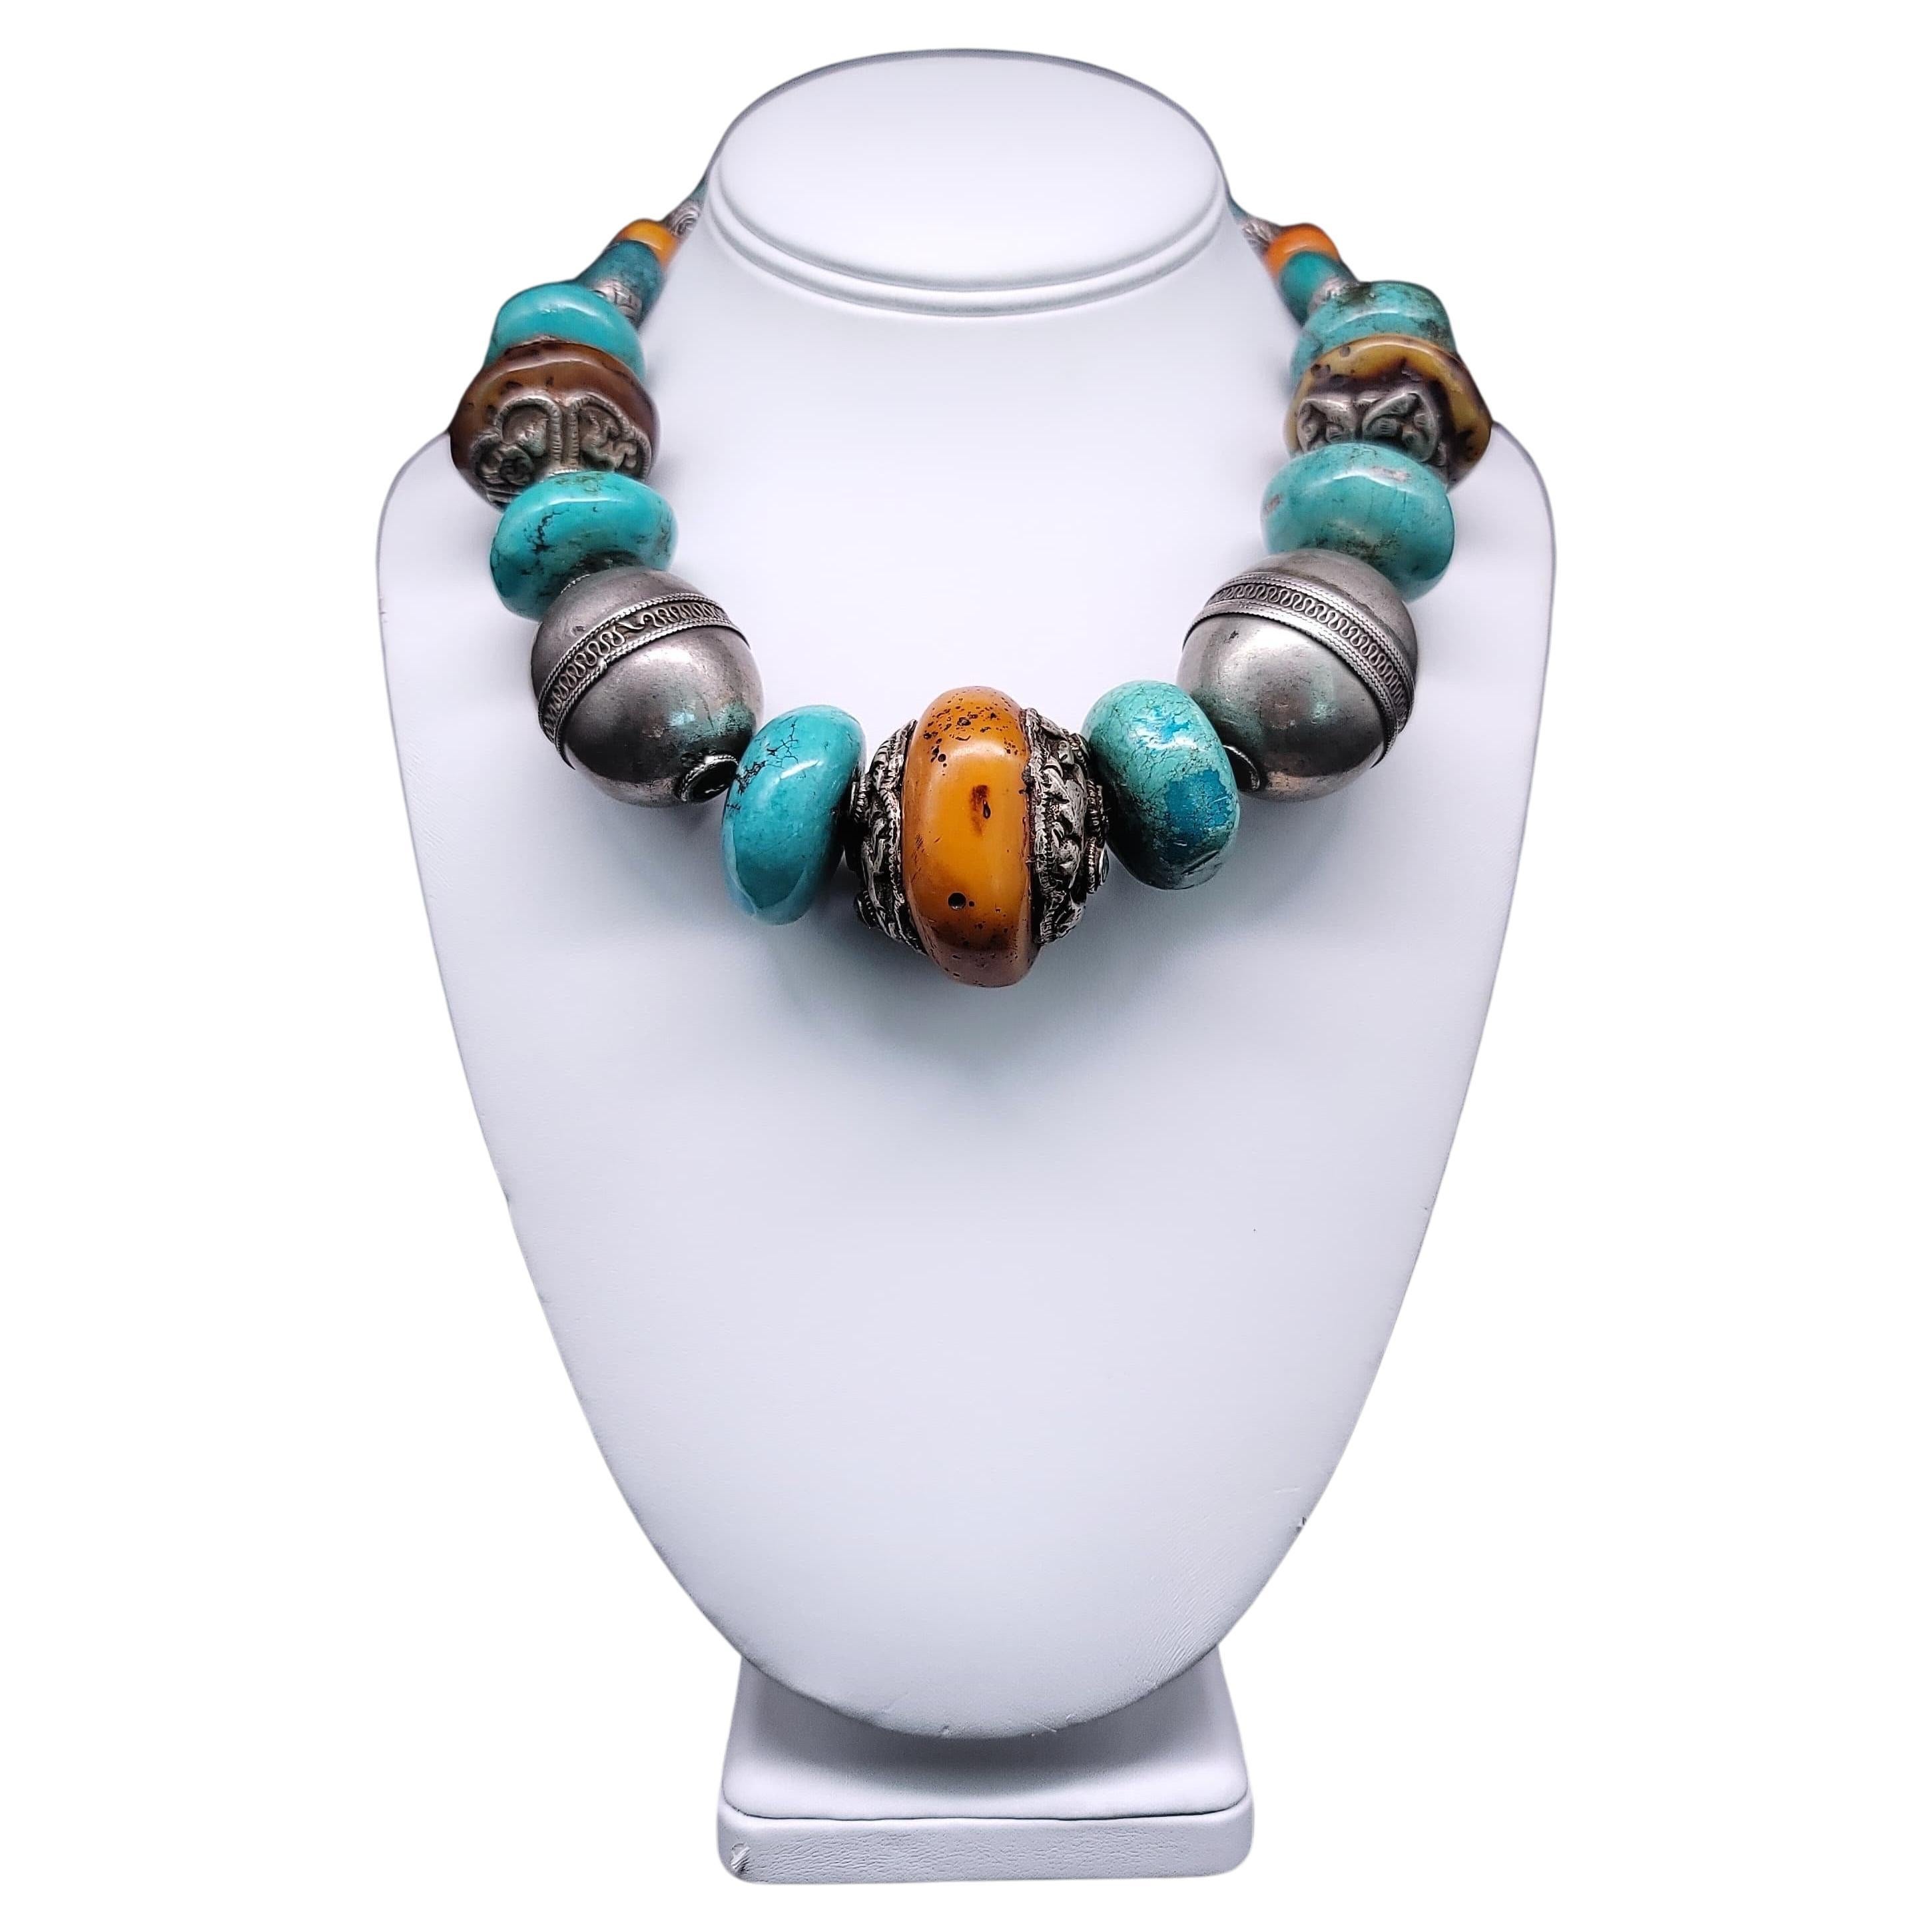 A.Jeschel Tibetan Turquoise bold Amber beads necklace.